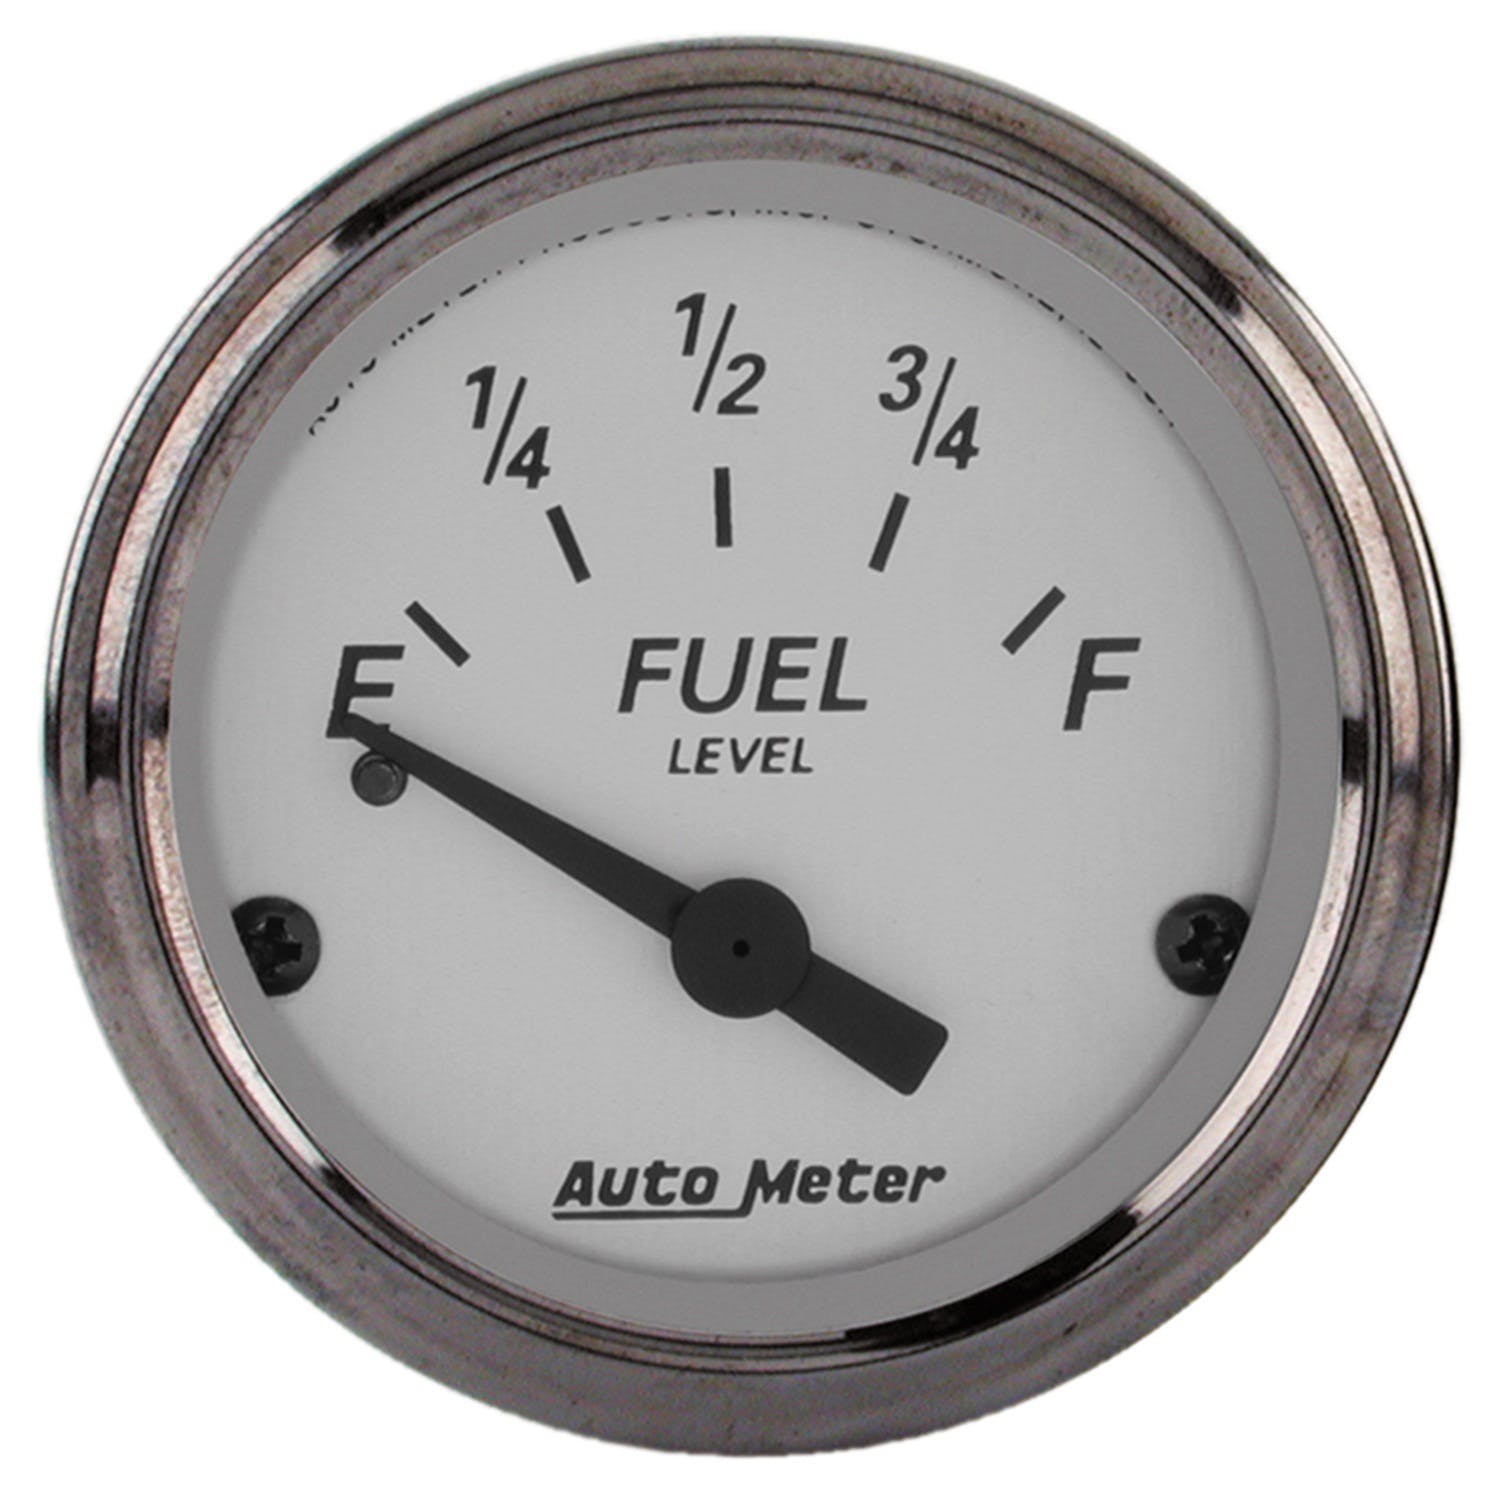 AutoMeter Products 1907 Fuel Level Gauge 0 E/30 F